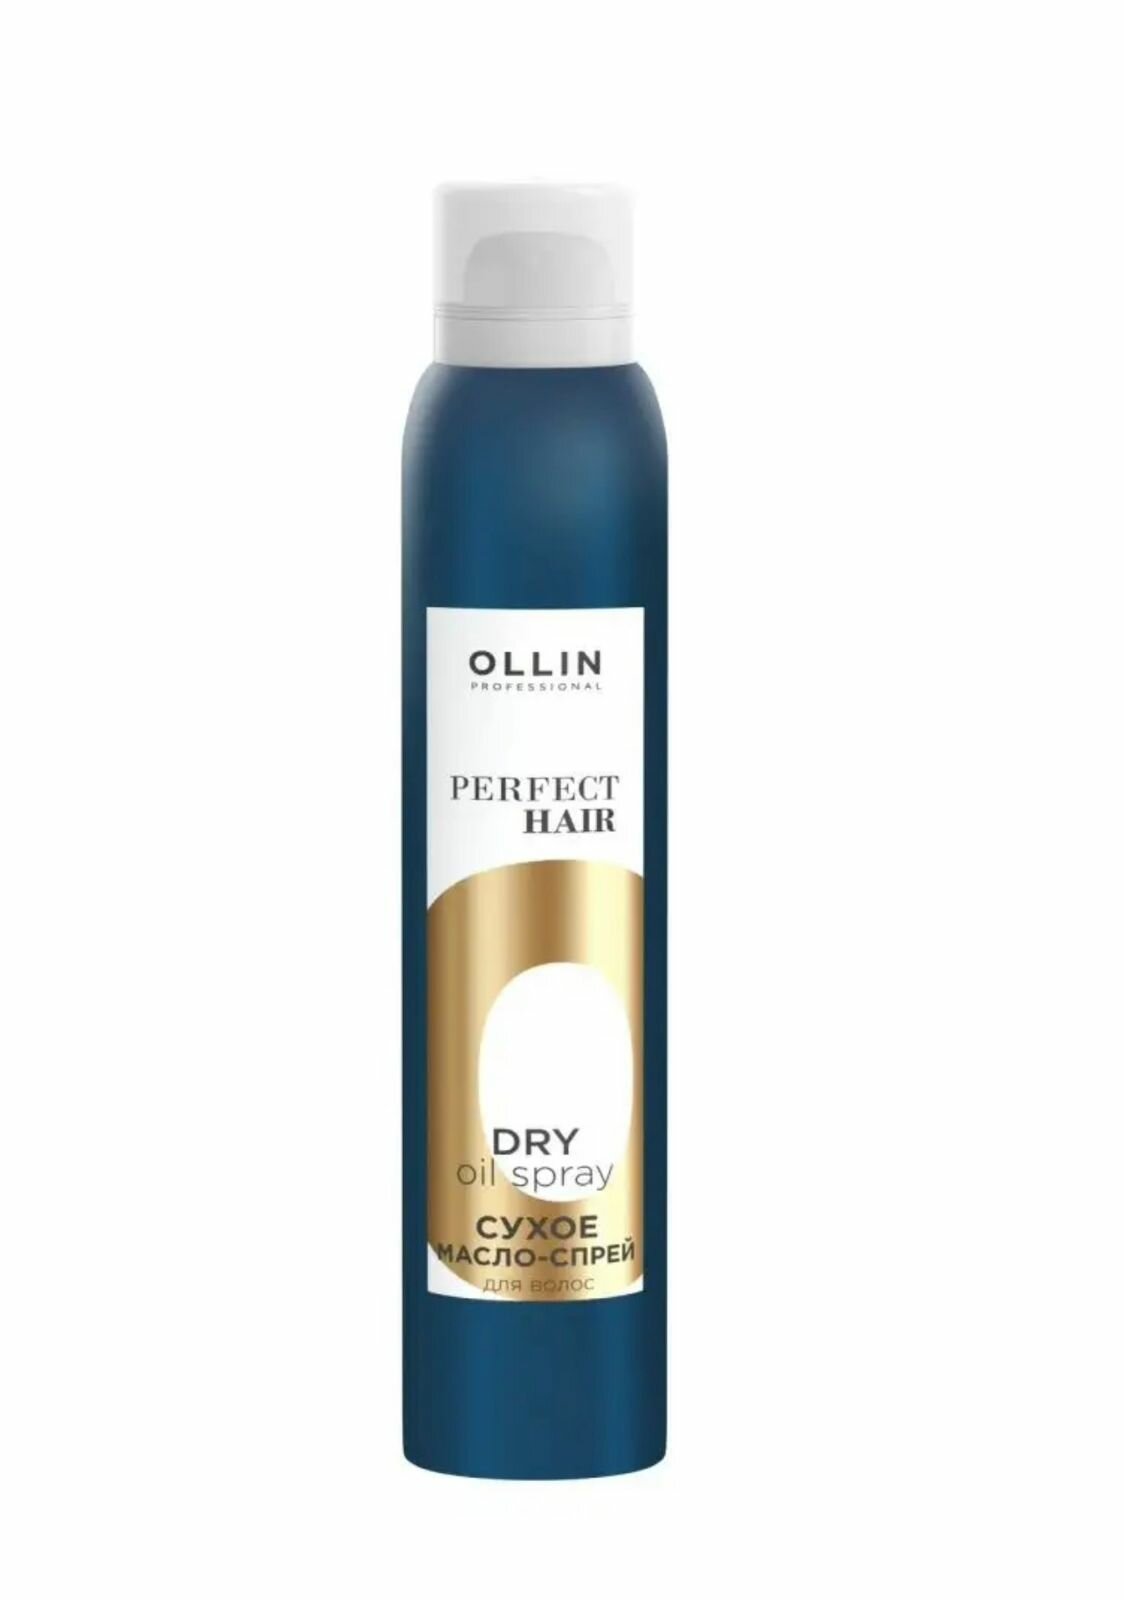 PERFECT HAIR Сухое масло-спрей для волос 200 мл OLLIN PROFESSIONAL